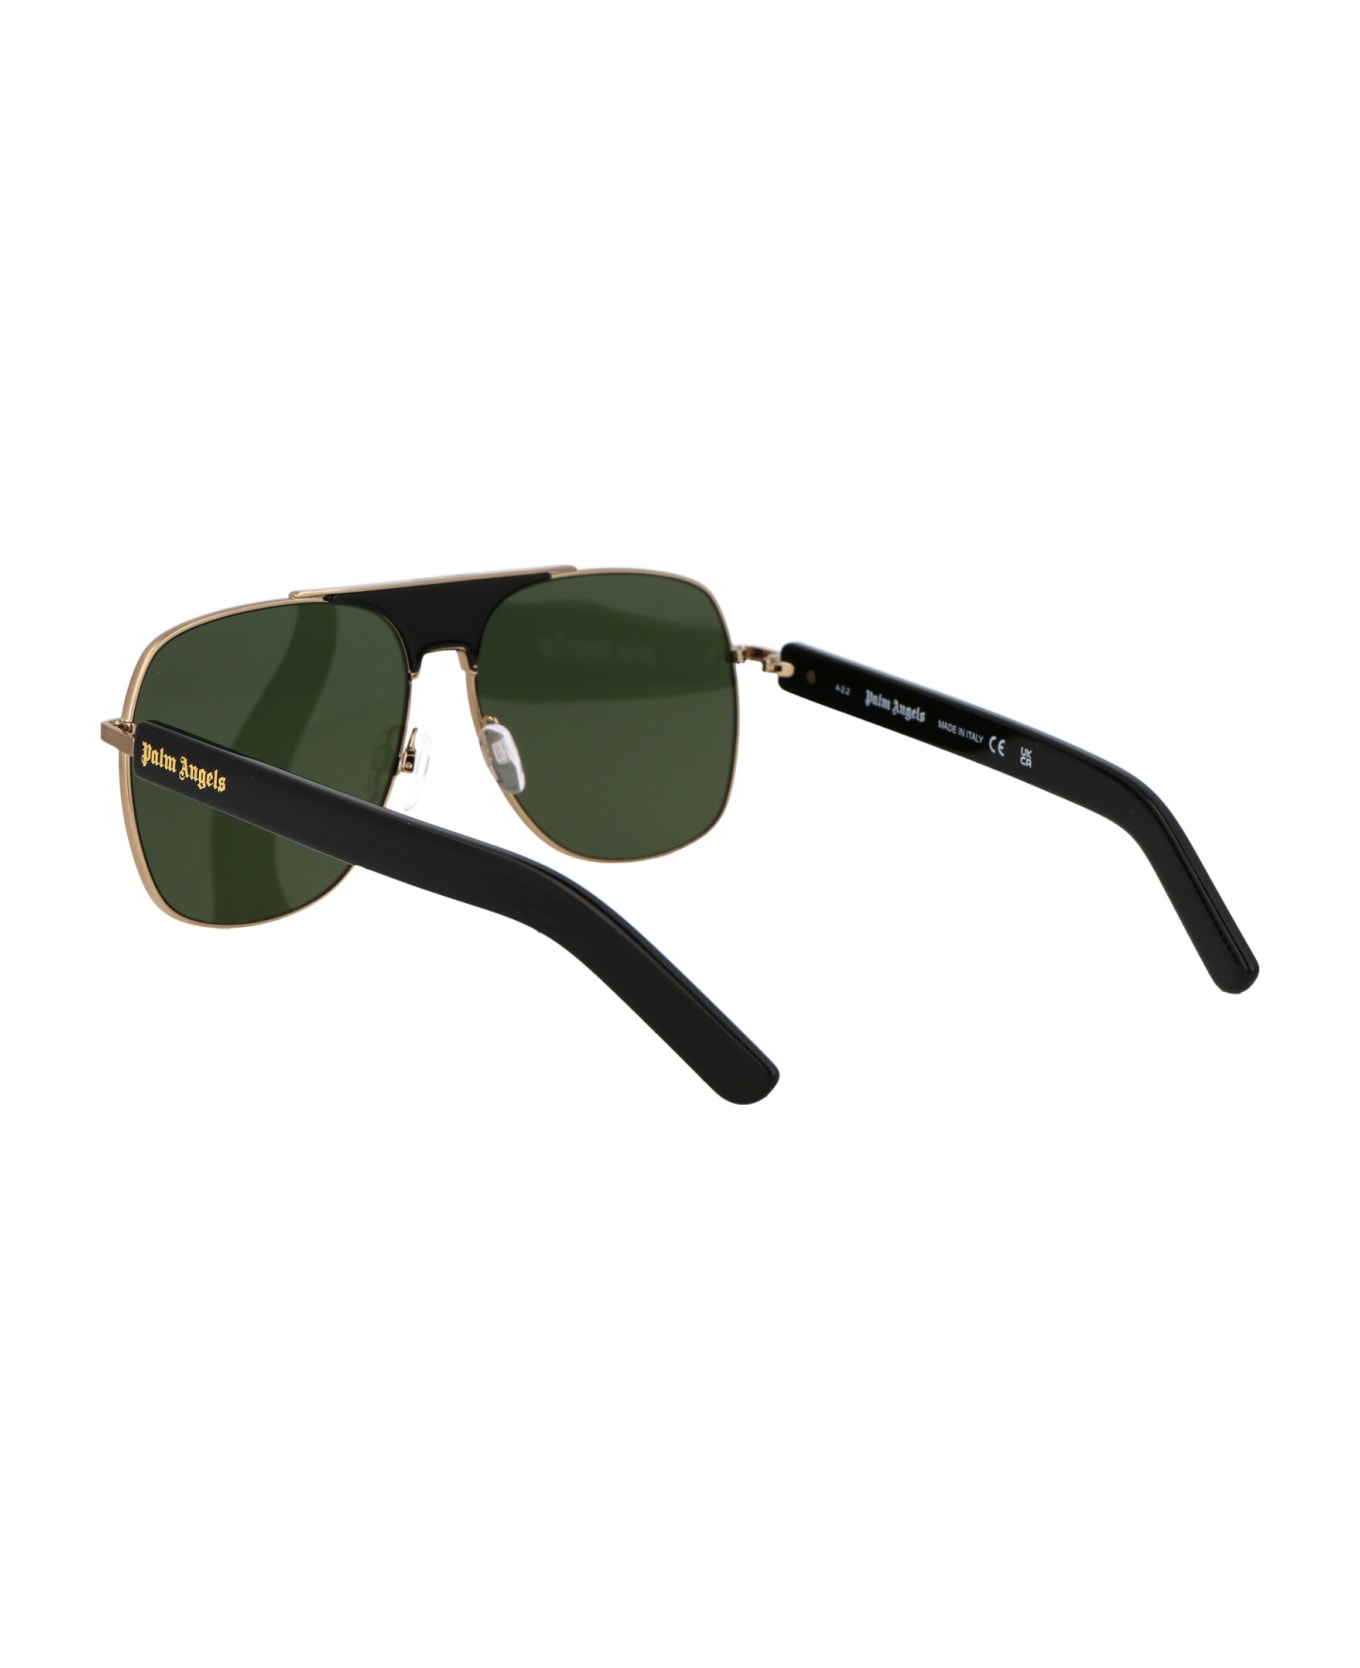 Palm Angels Bay Sunglasses - 1055 BLACK